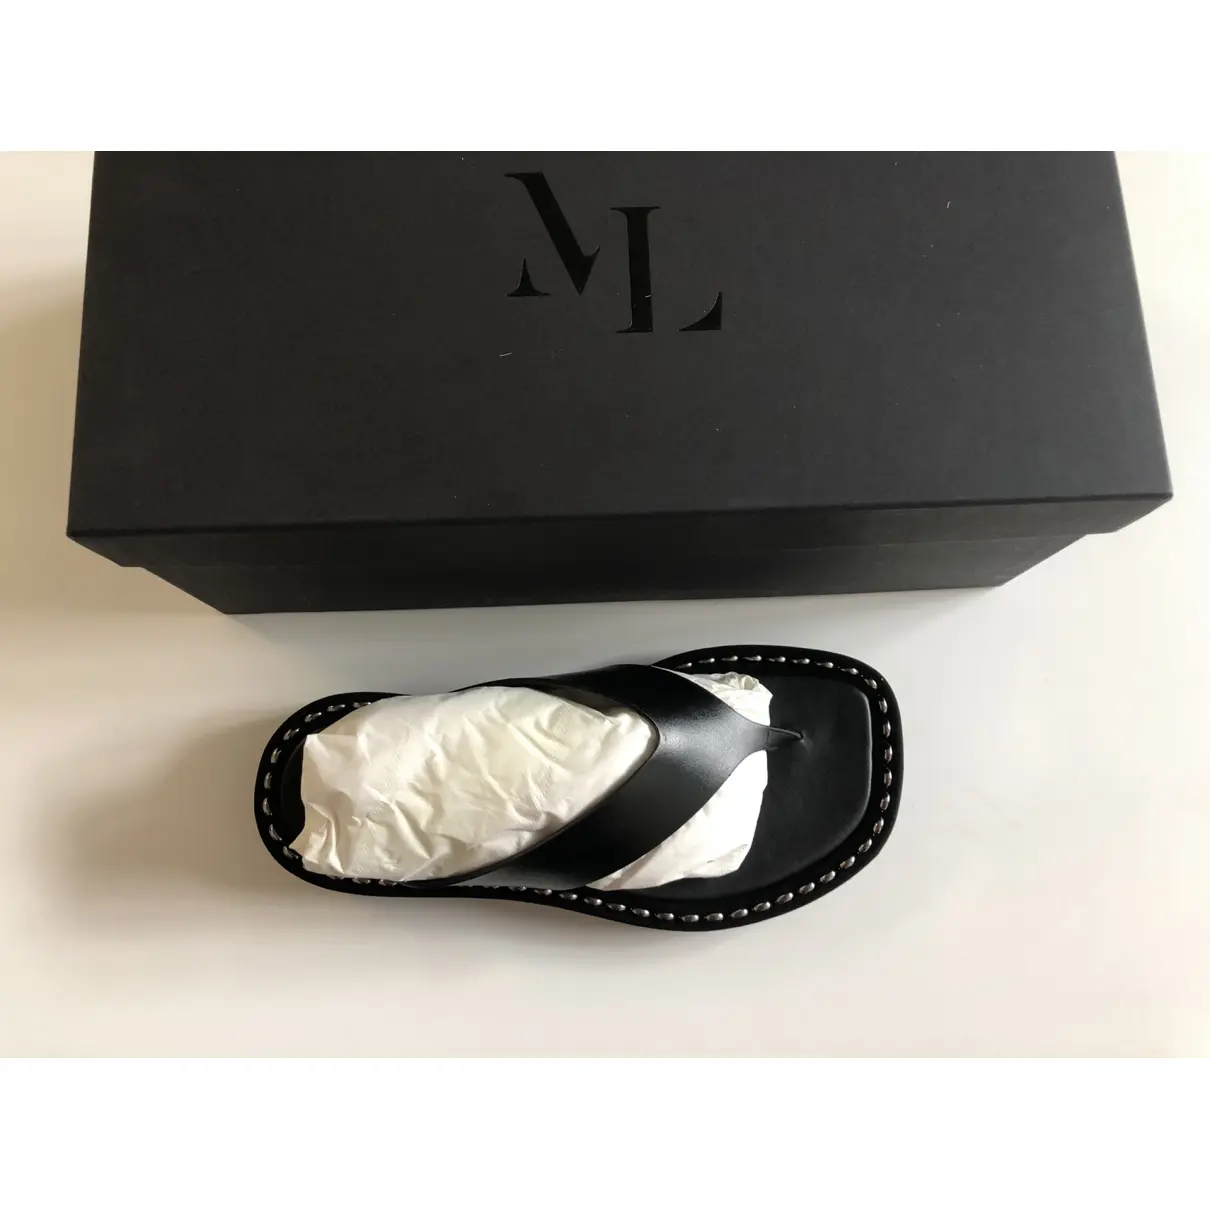 Buy Marie Laffont Leather flip flops online